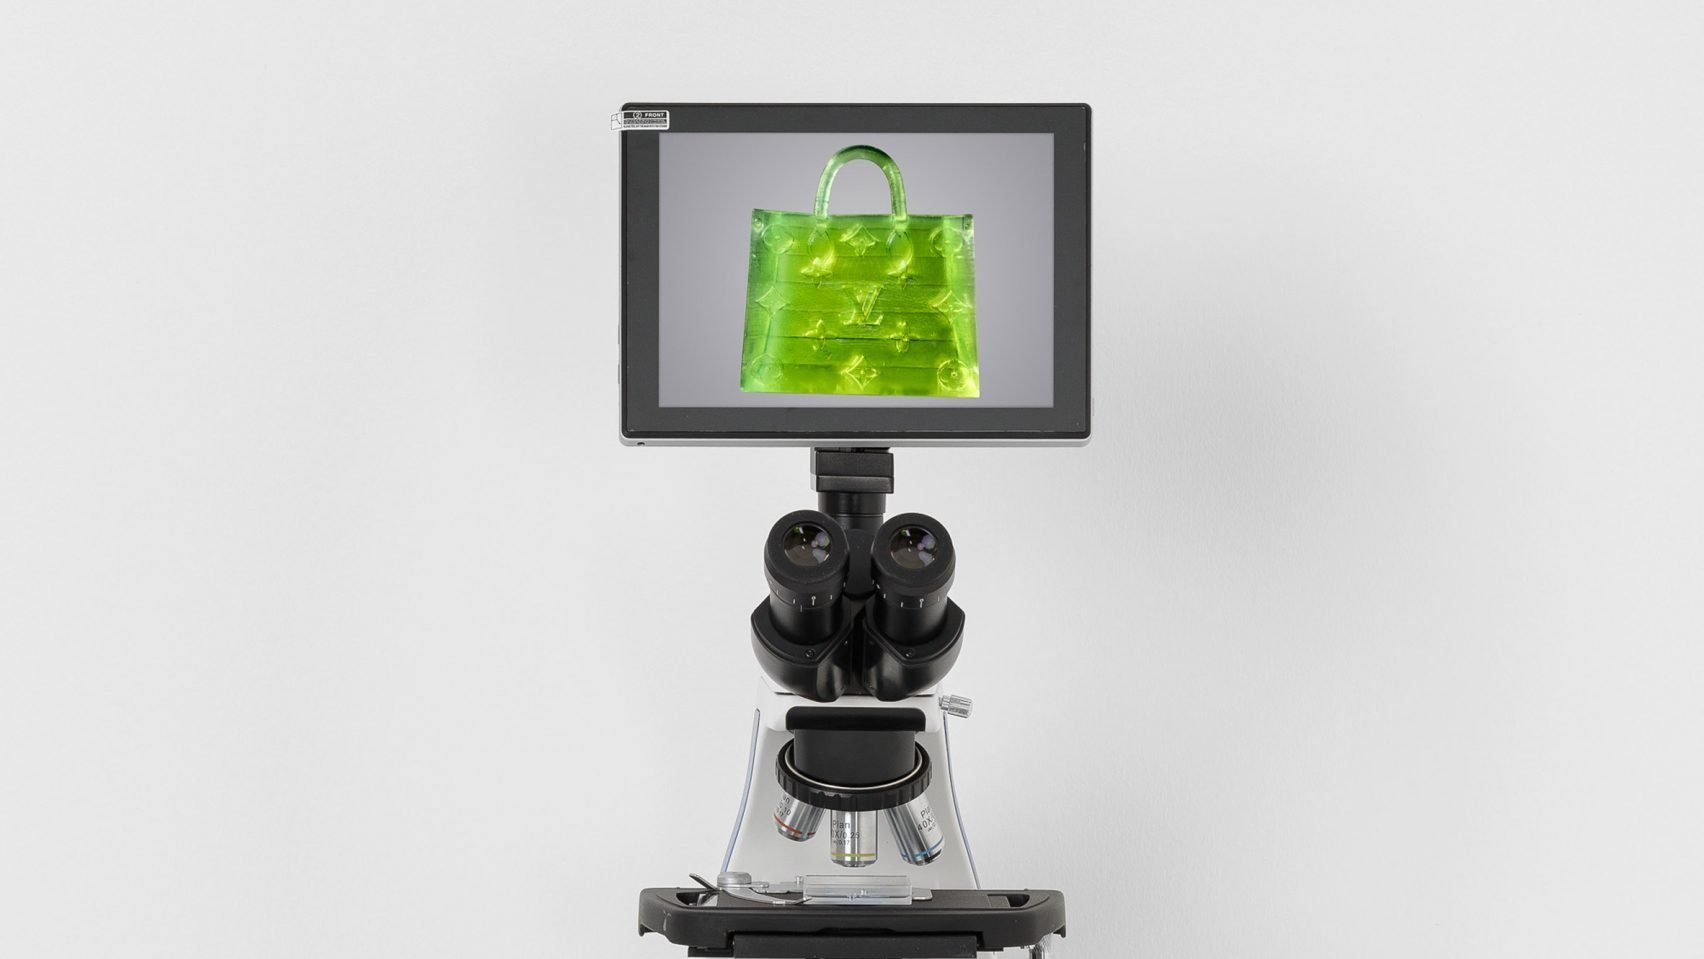 MSCHF have created a microscopic Louis Vuitton handbag for